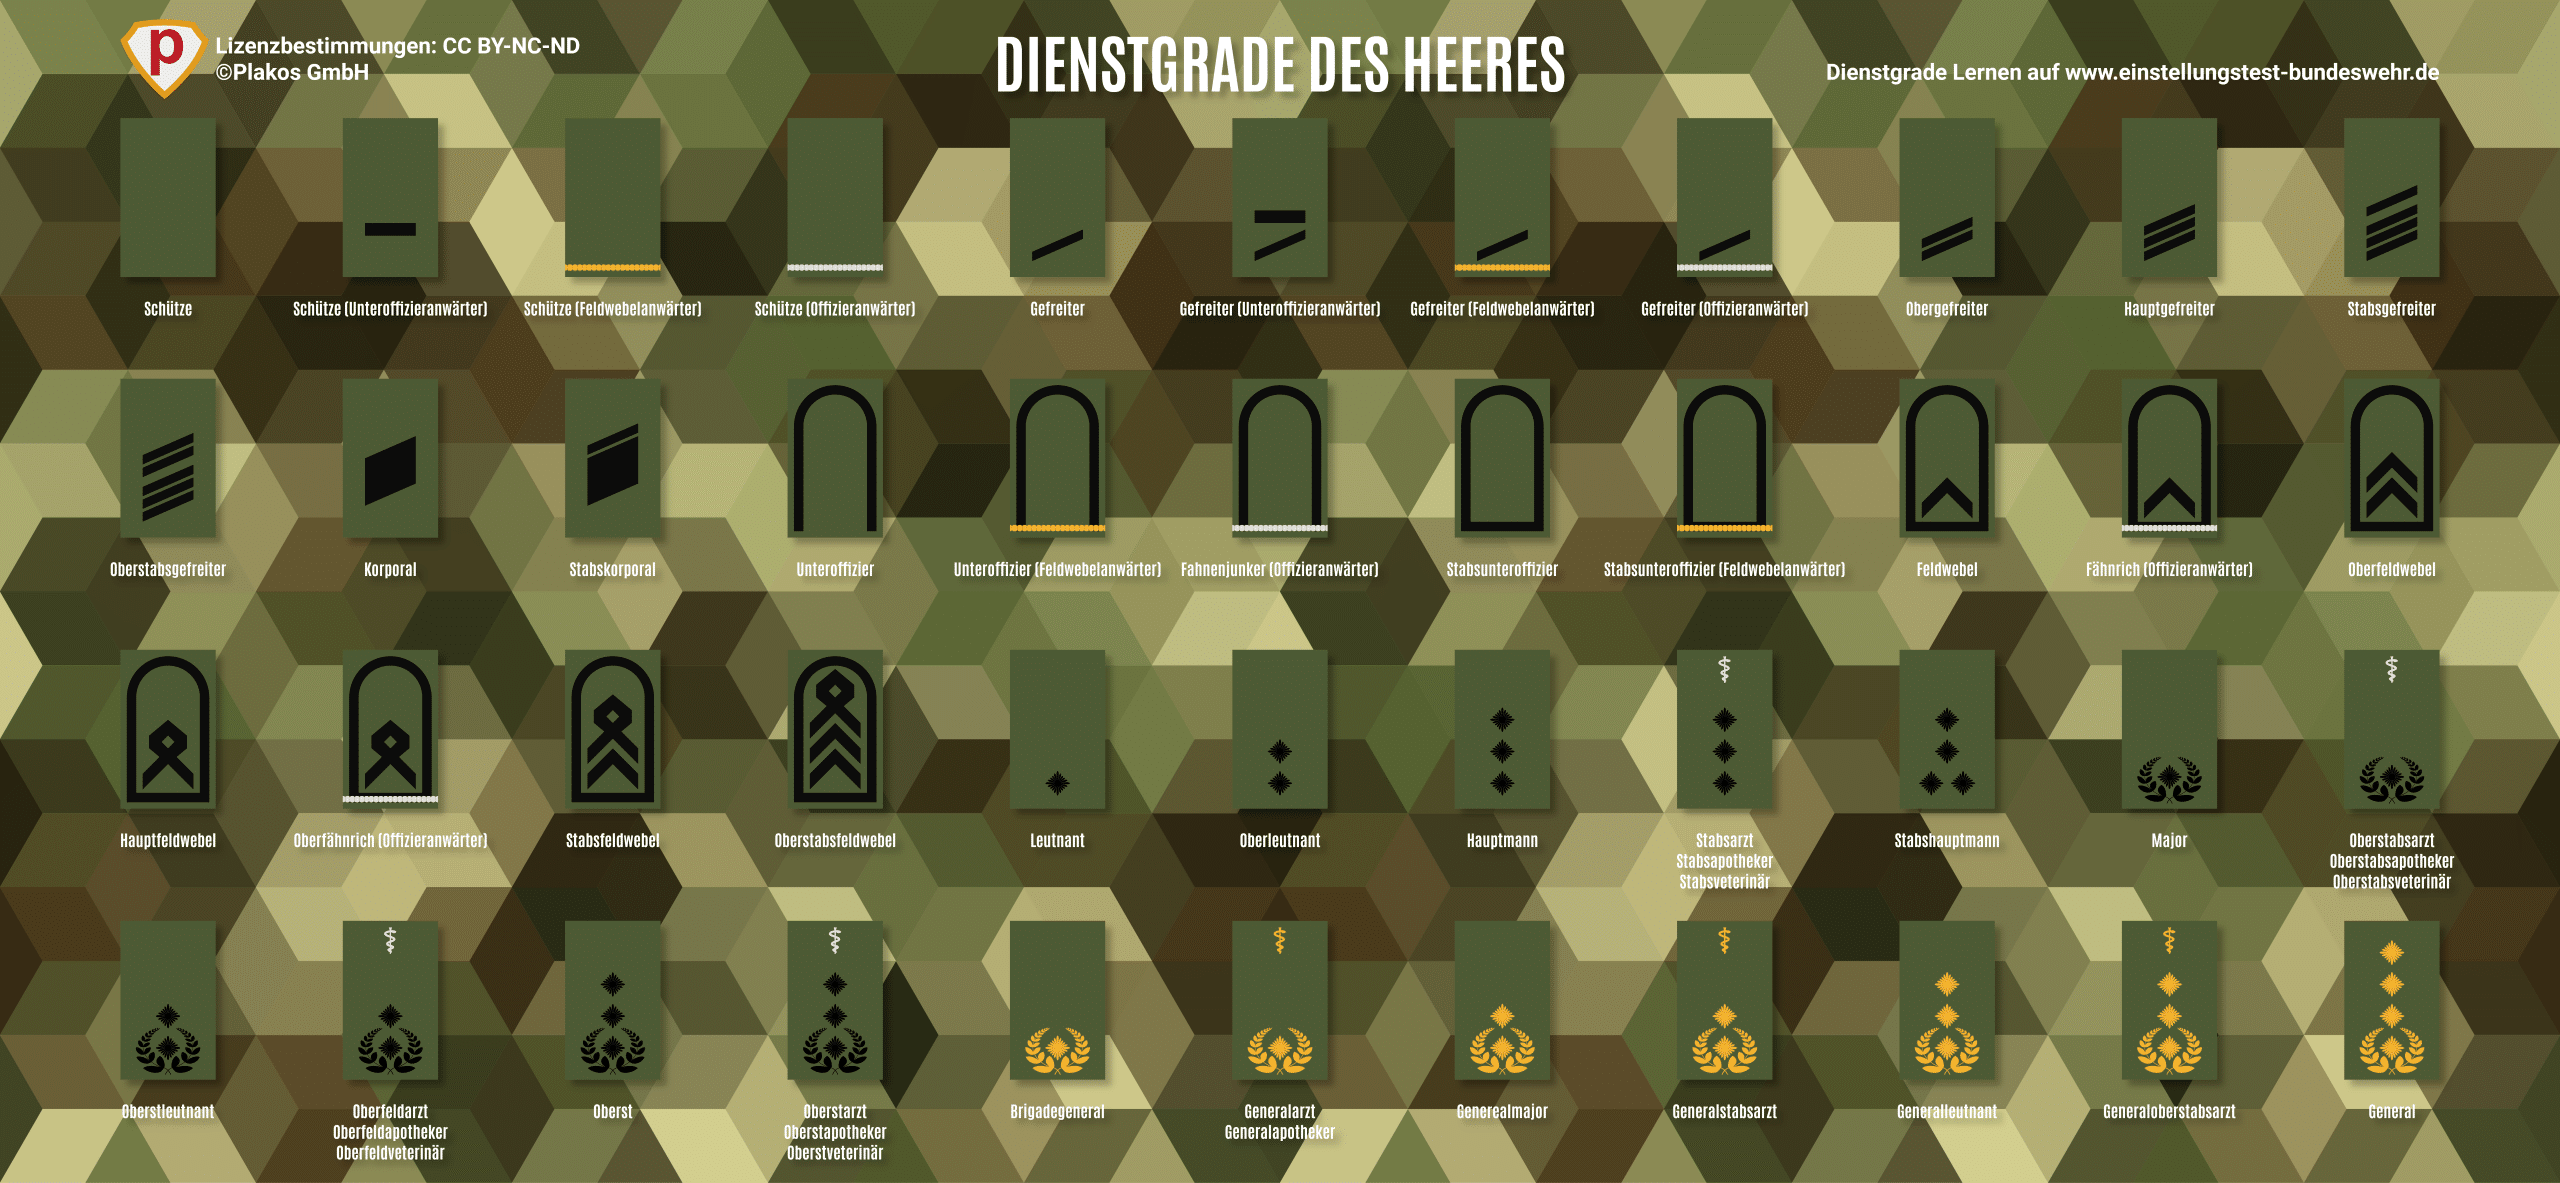 Bundeswehr Dienstgrade des Heeres